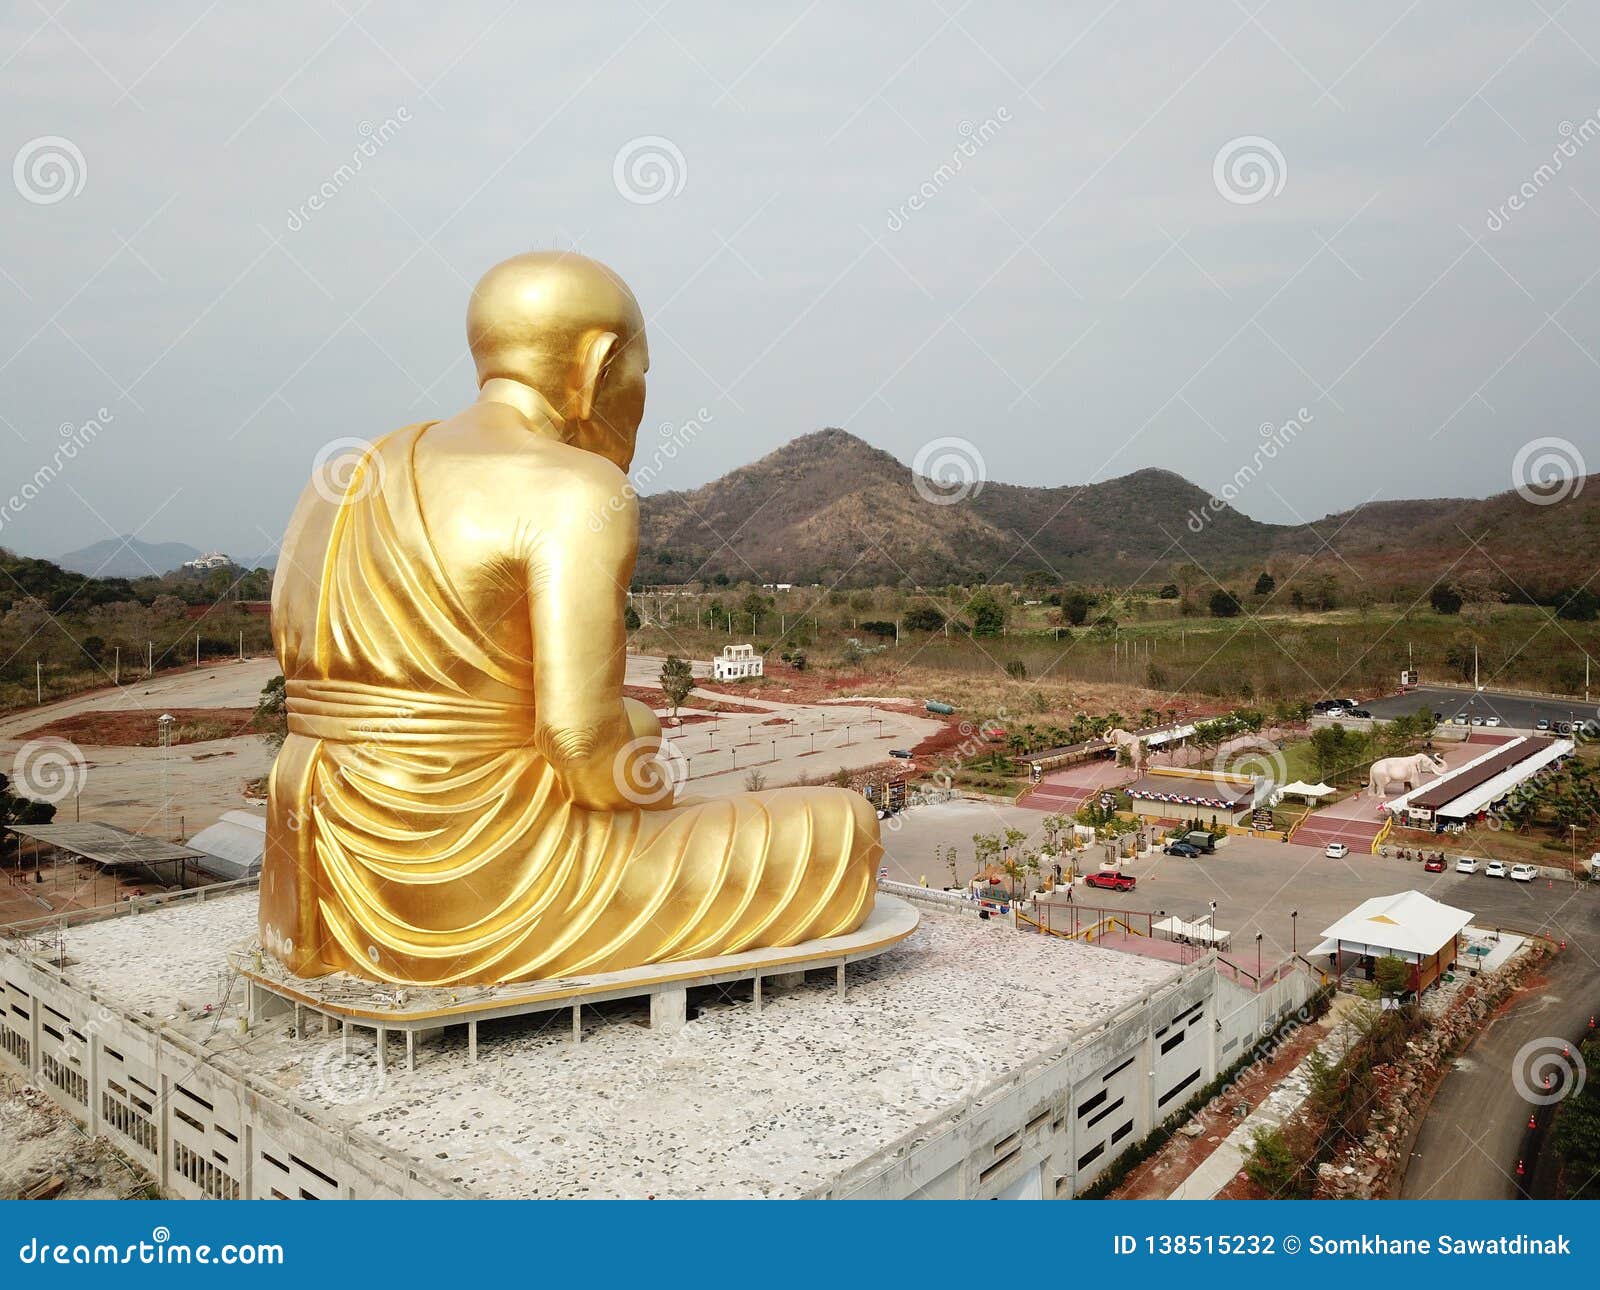 glod buddha,the largest in the world at nakhon ratchasima,thailand